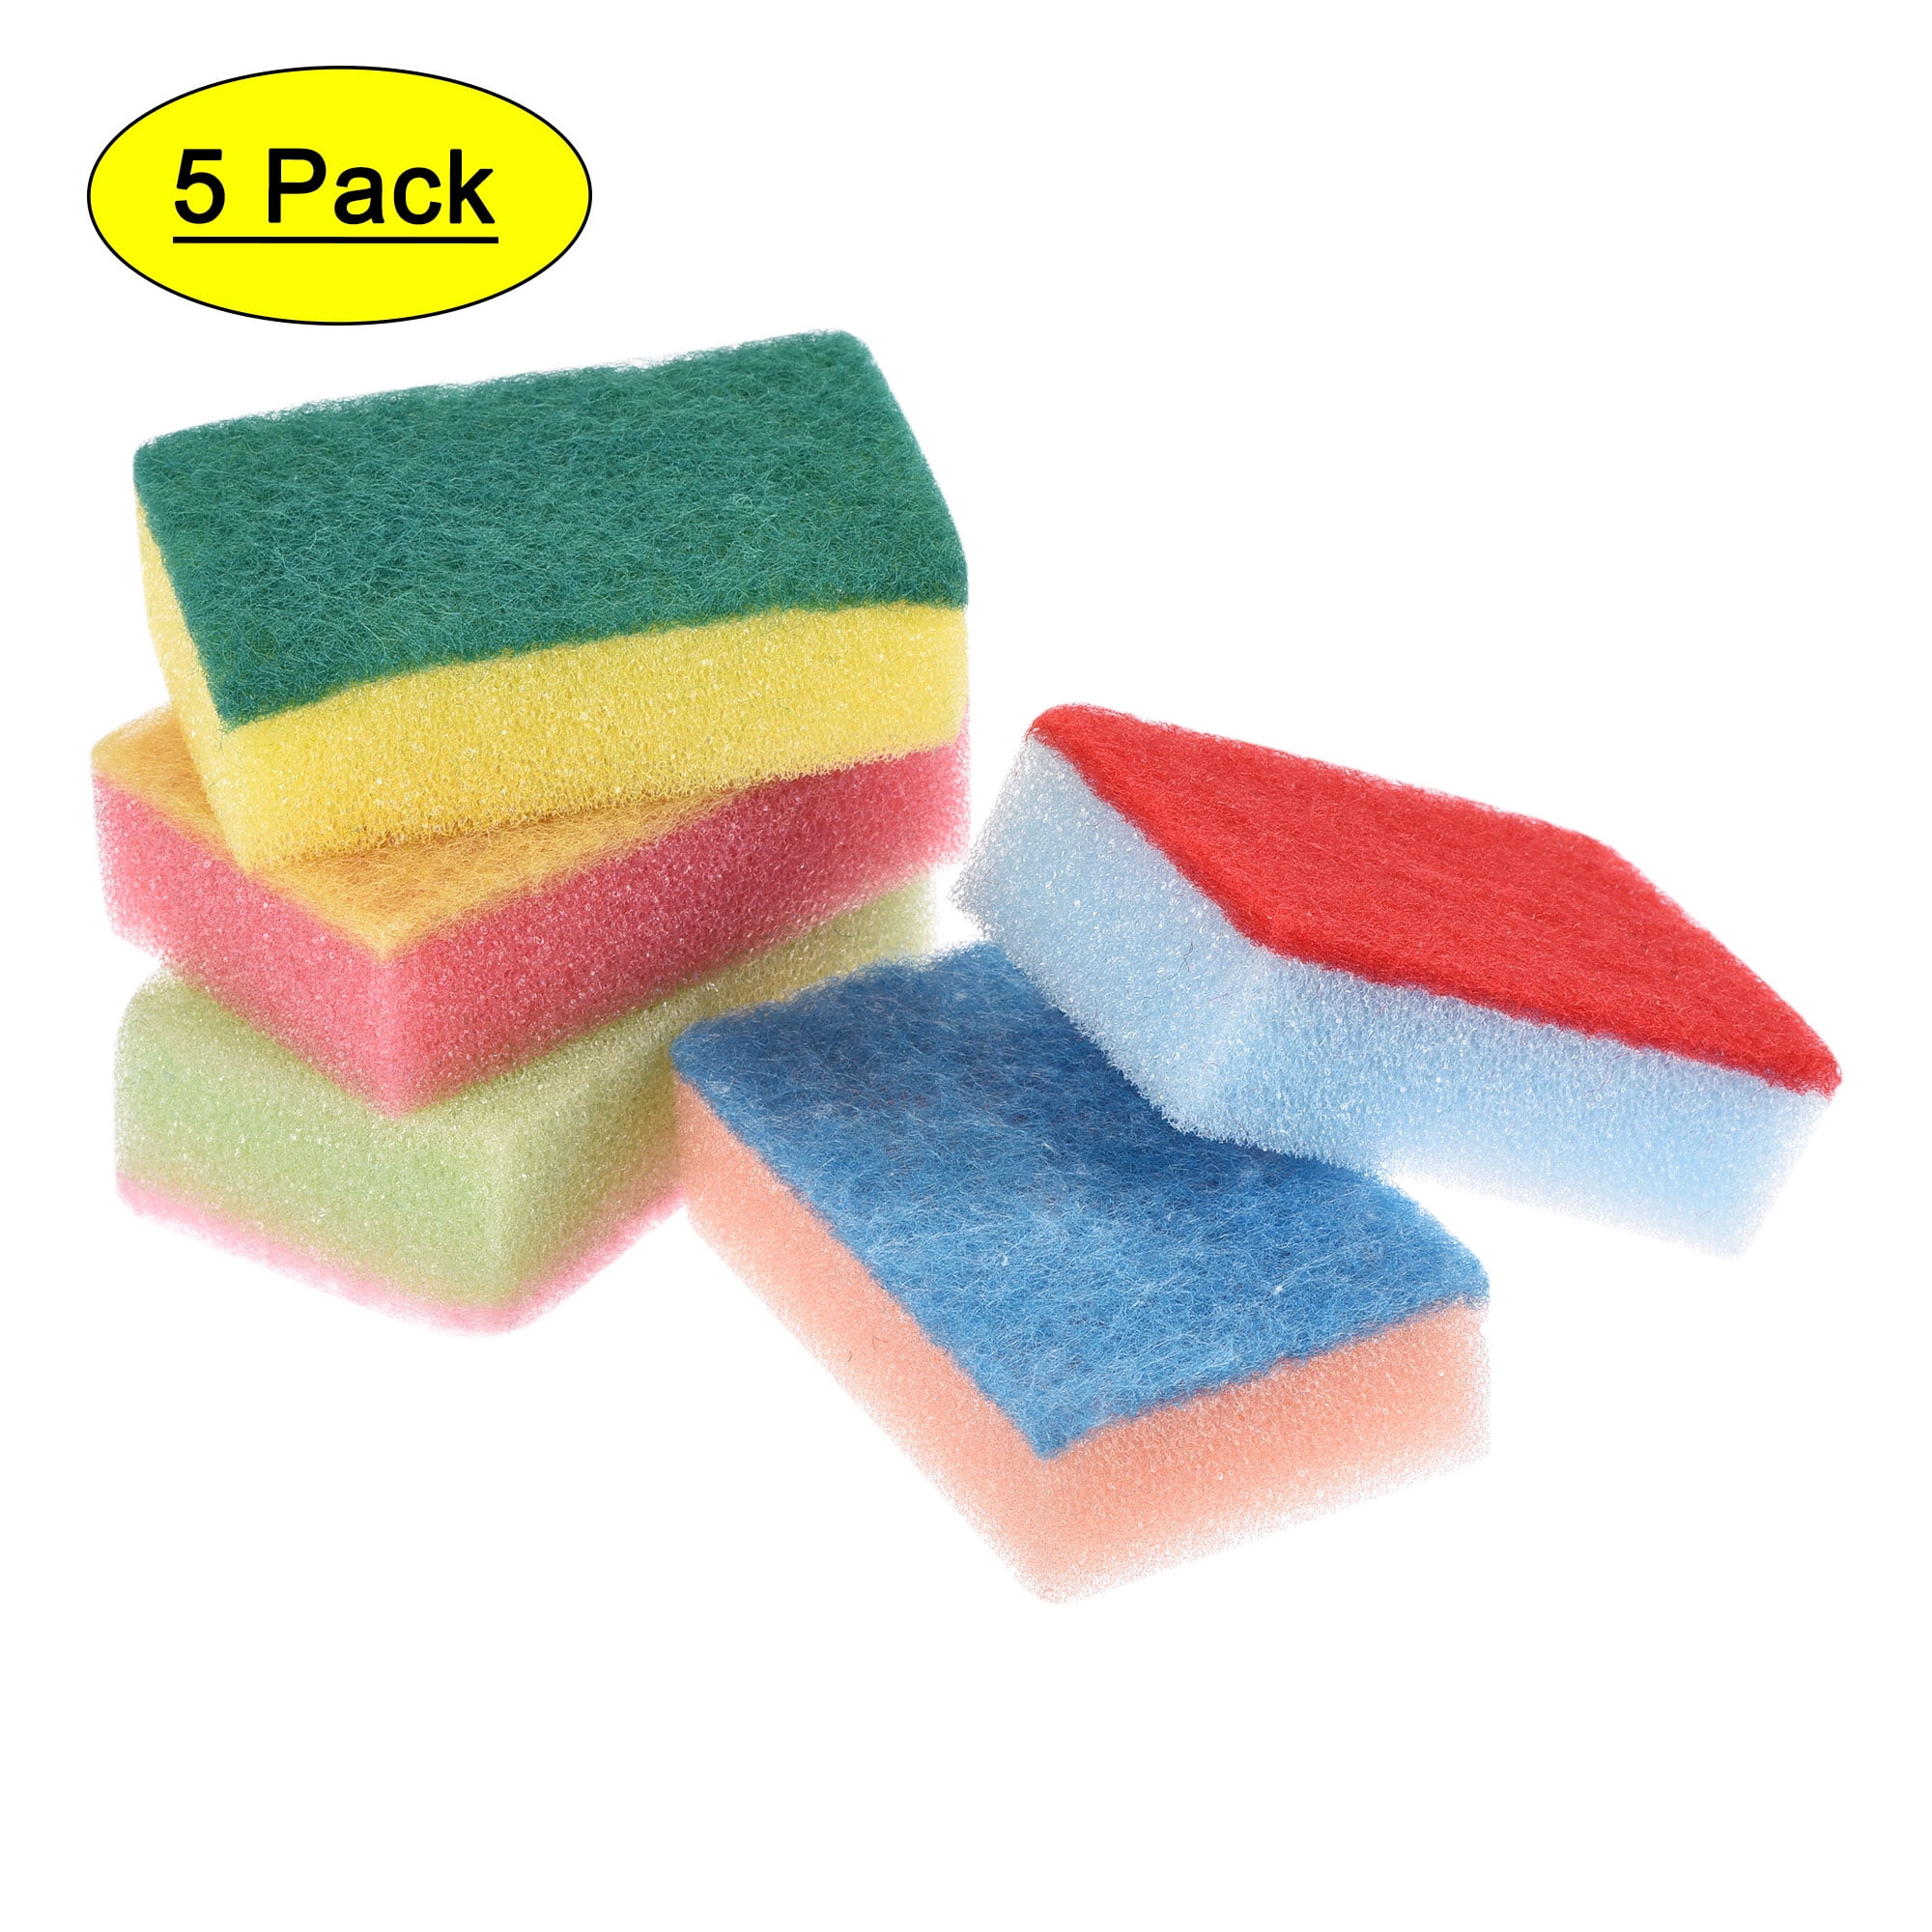 NuValu Multi-Purpose Mesh Net Kitchen Cleaning Dishwash Sponge Assorted Color Sponges 12 Pack 